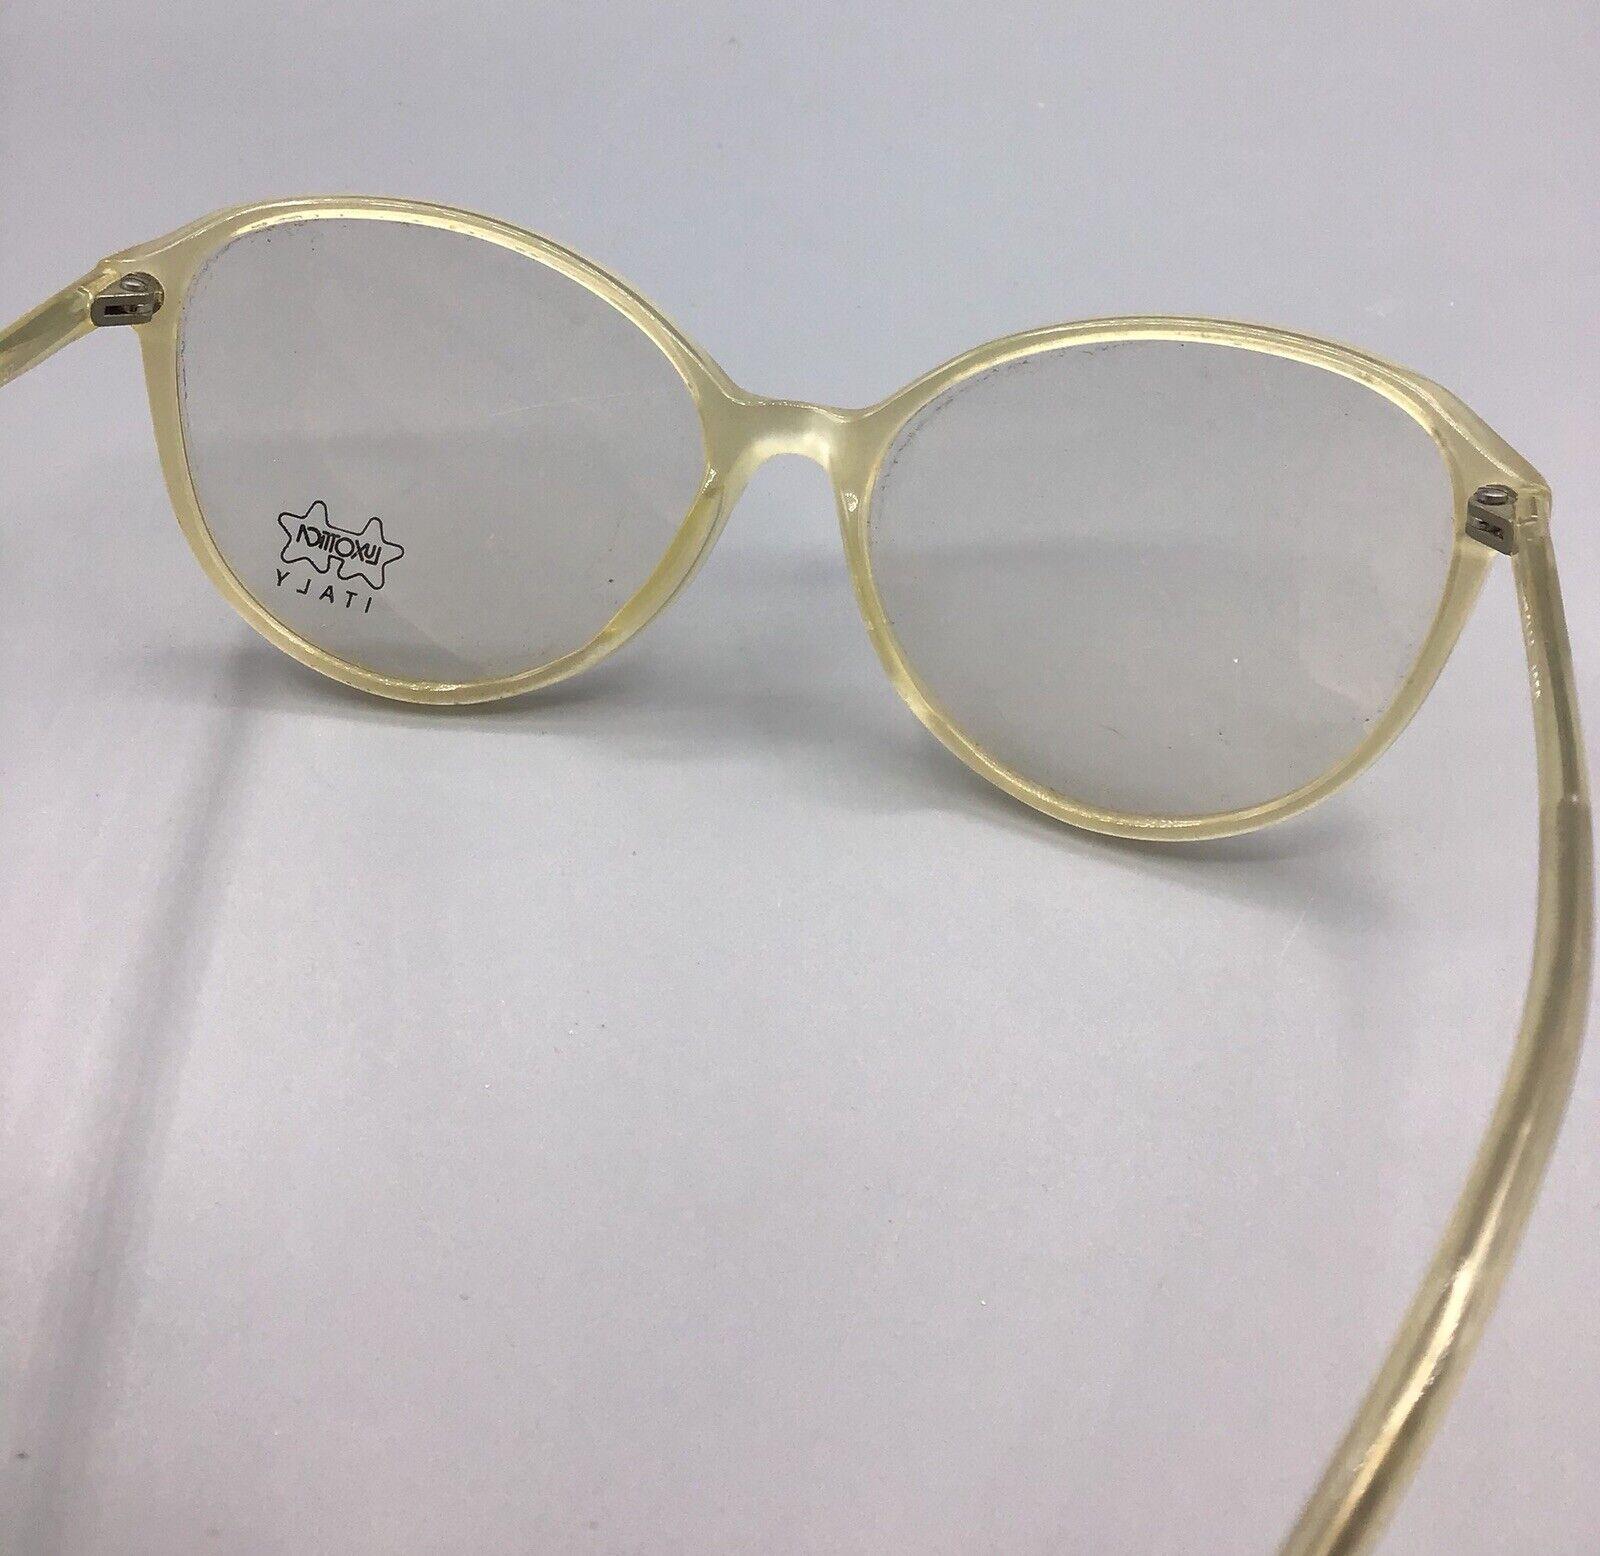 Luxottica occhiale vintage frame Italy d57 4052 brillen eyewear lunettes